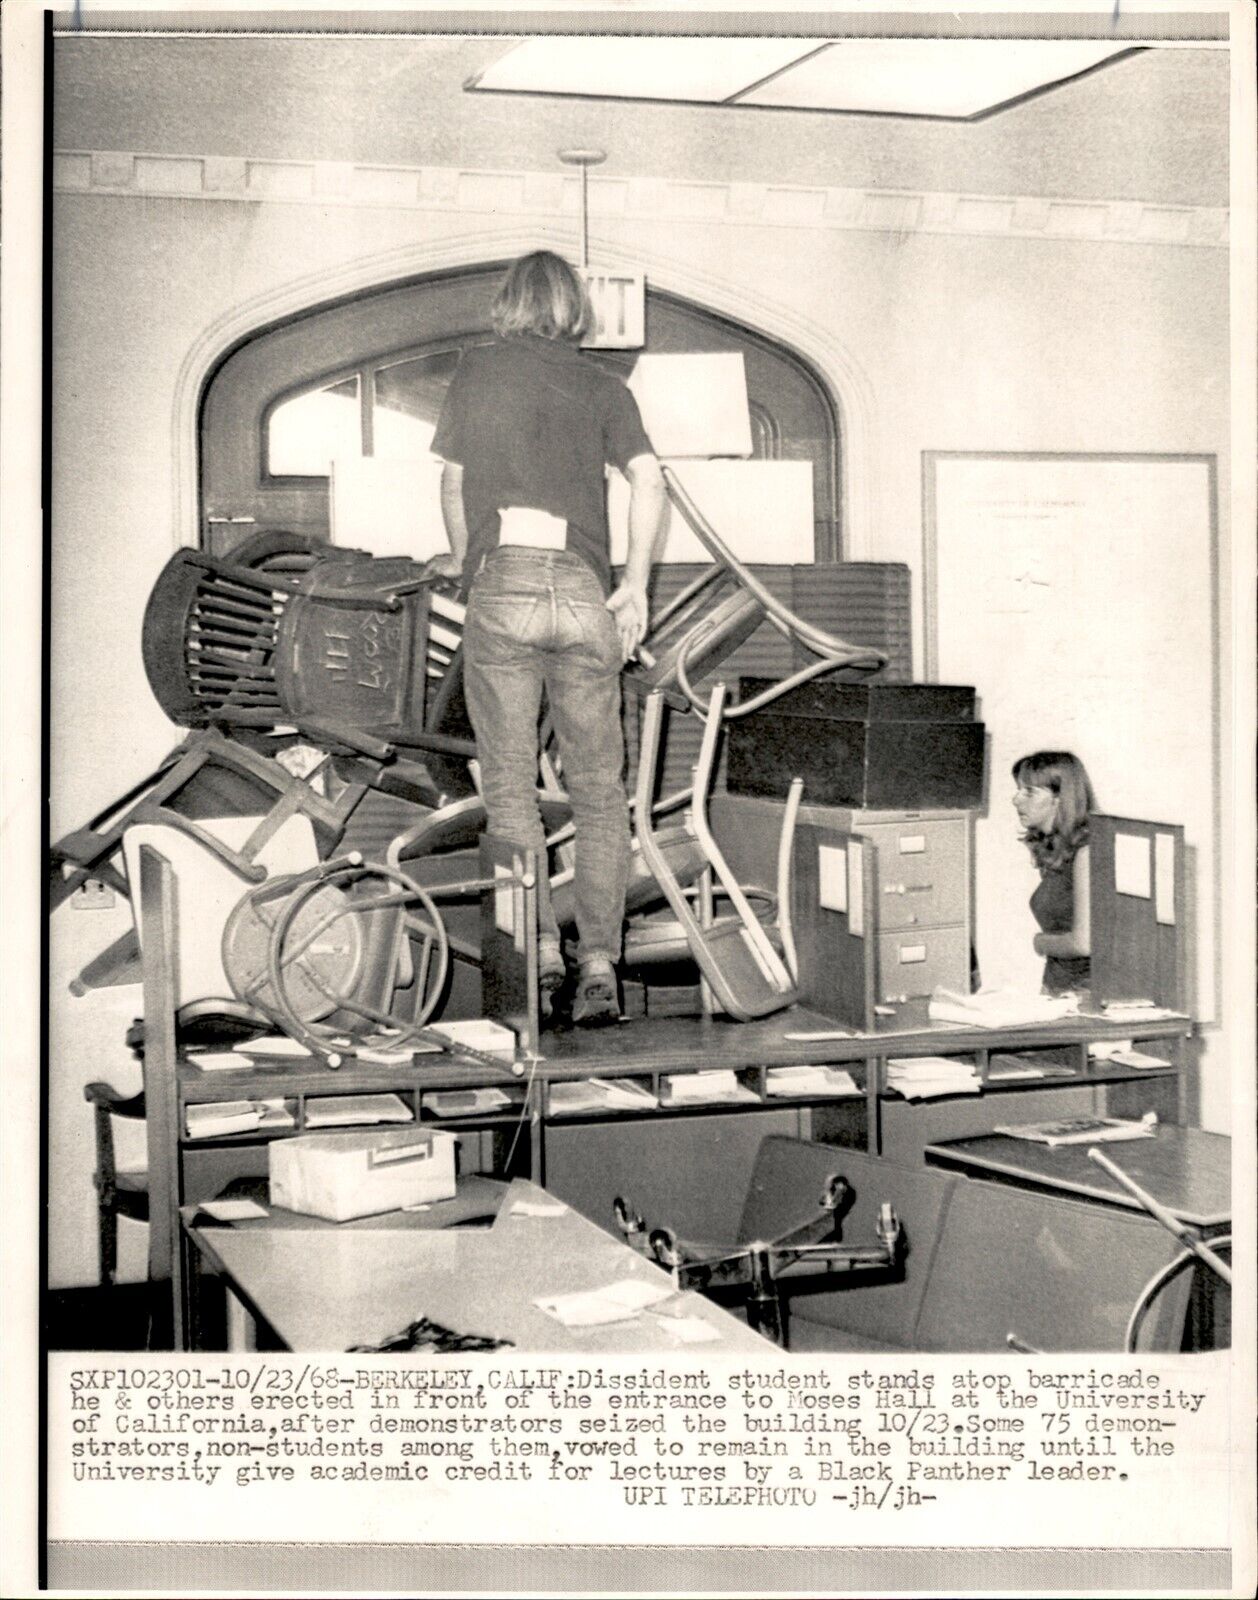 LG54 1968 Oversize UPI Wire Photo DISSIDENT BERKELEY STUDENT STANDS ON BARRICADE